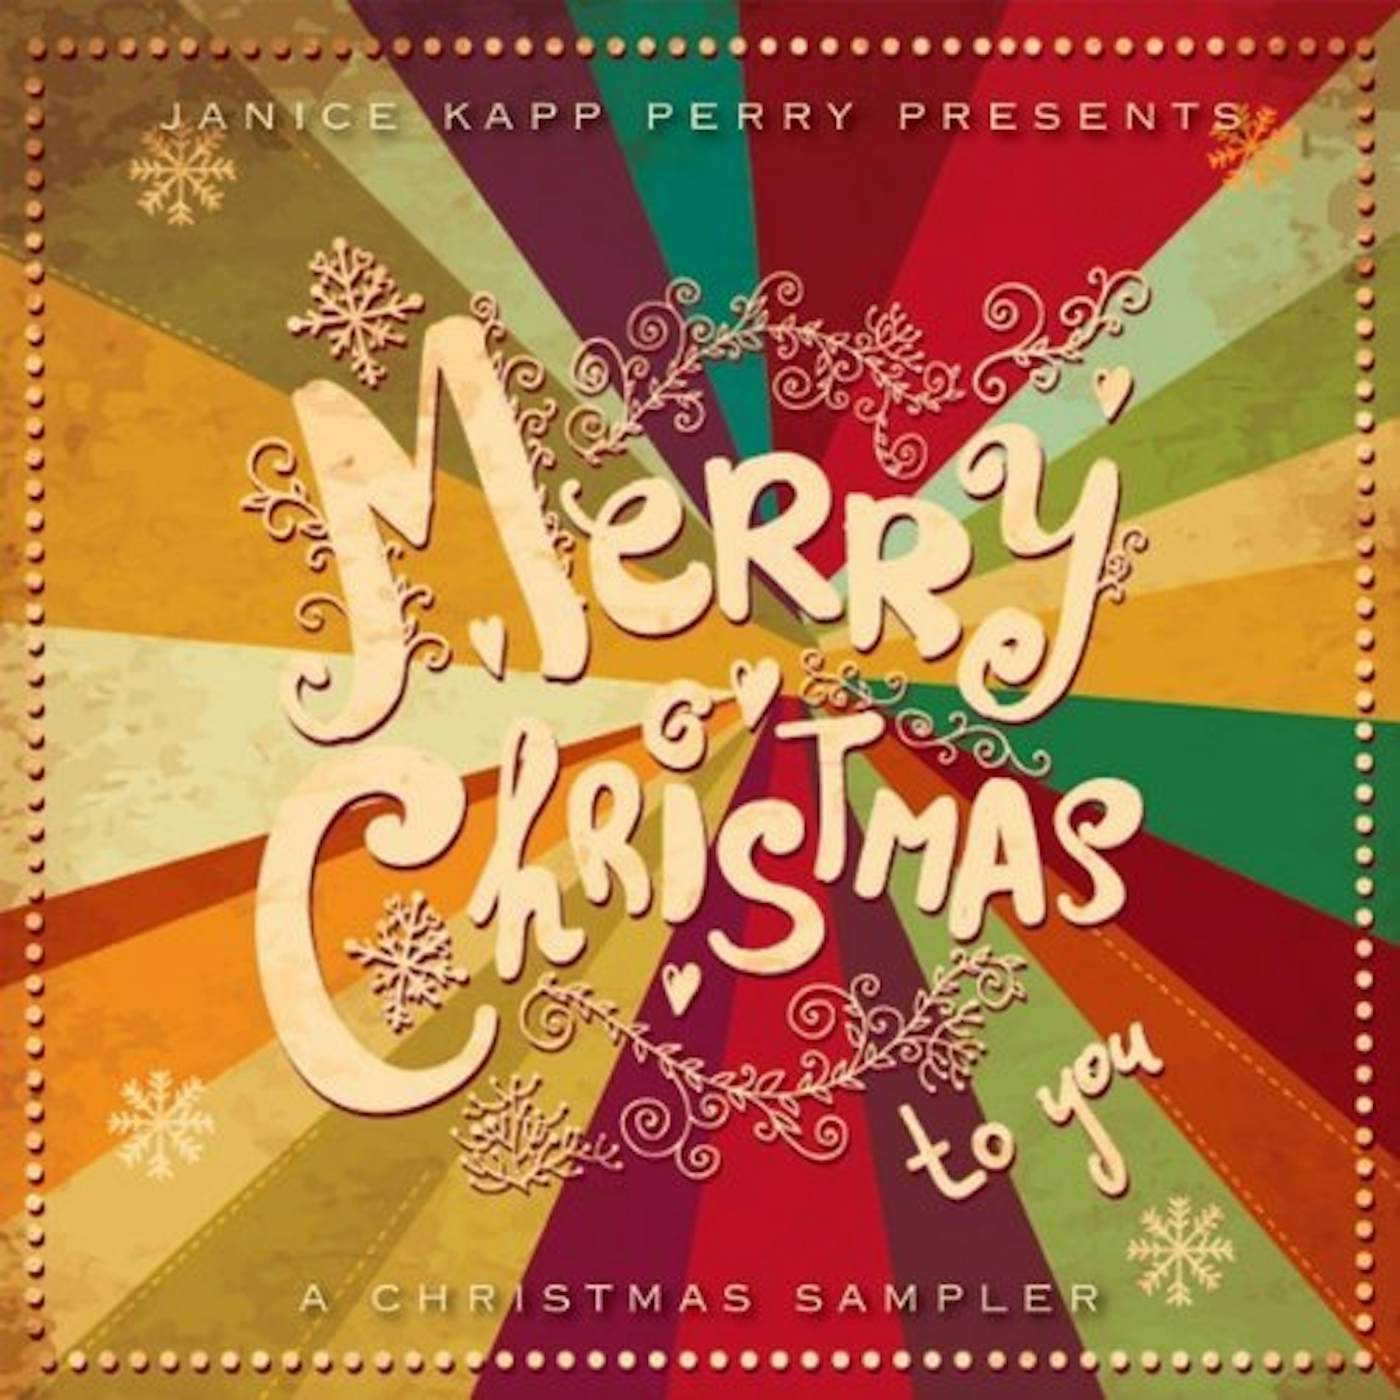 Janice Kapp Perry MERRY CHRISTMAS TO YOU CD